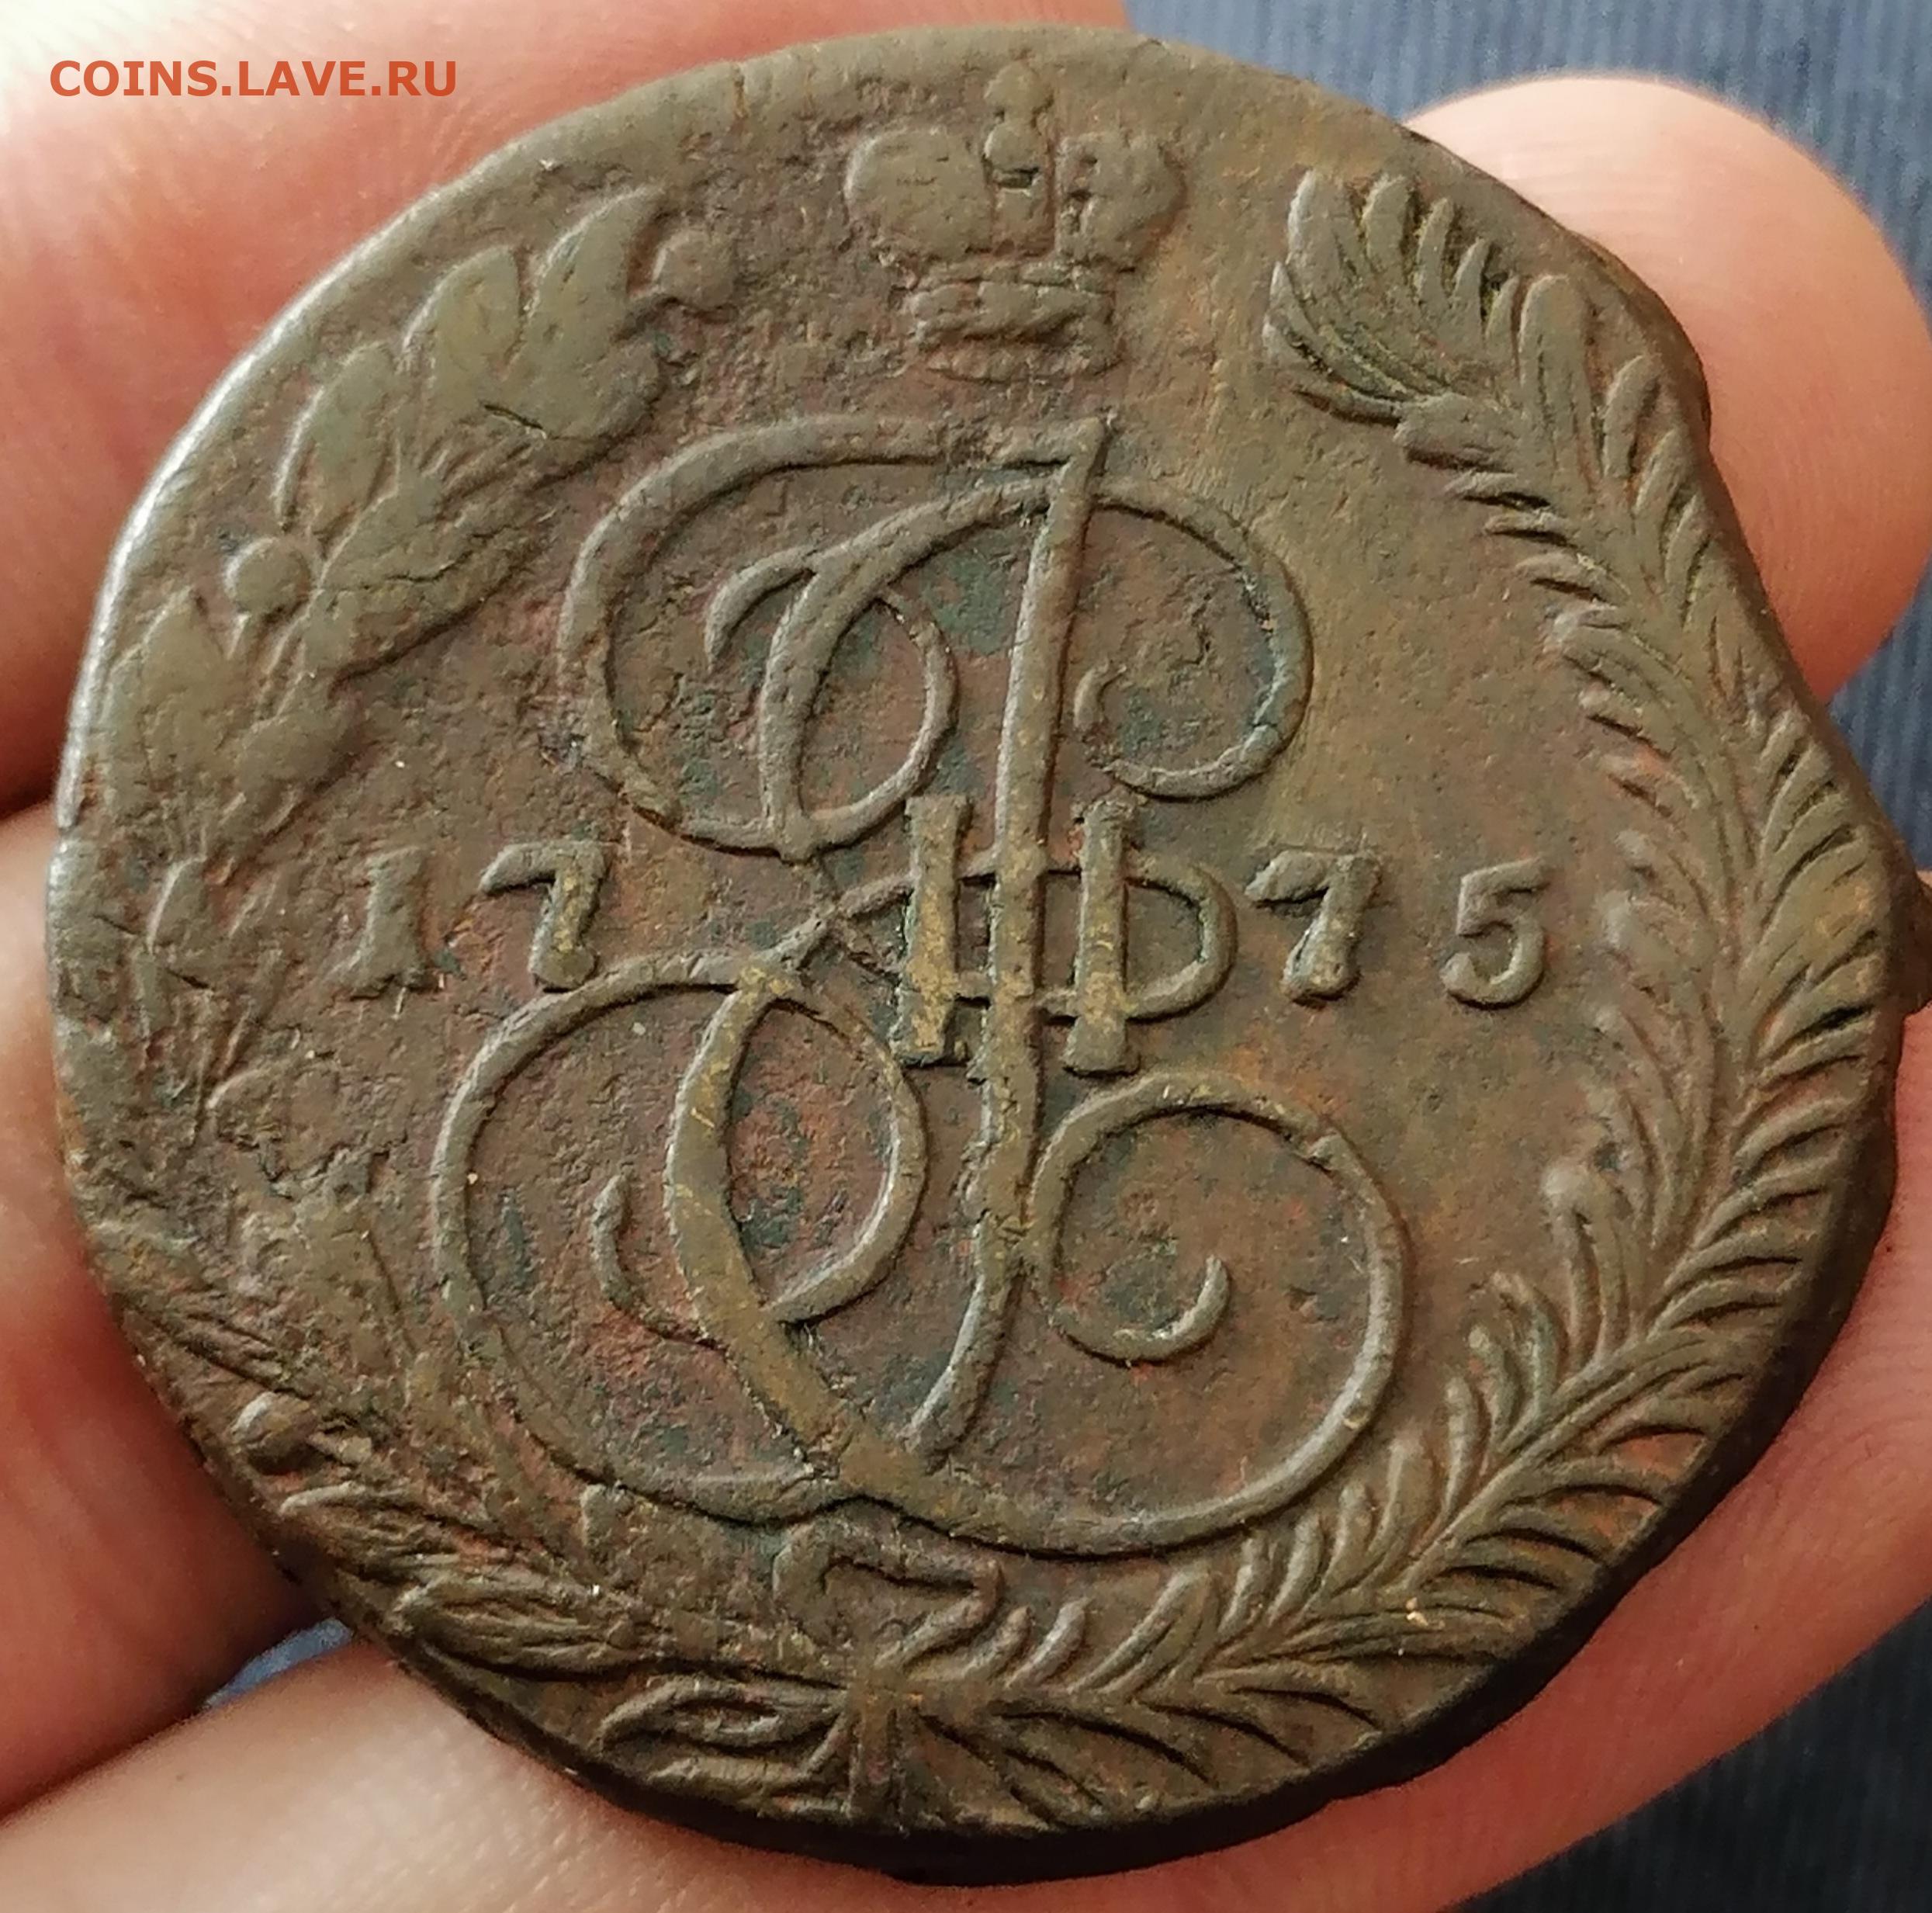 3 рубля 5 копеек. Монета 5 копеек Старая. 5 Копеек 1775 ем. Большая монета. Старинная монета большого размера.